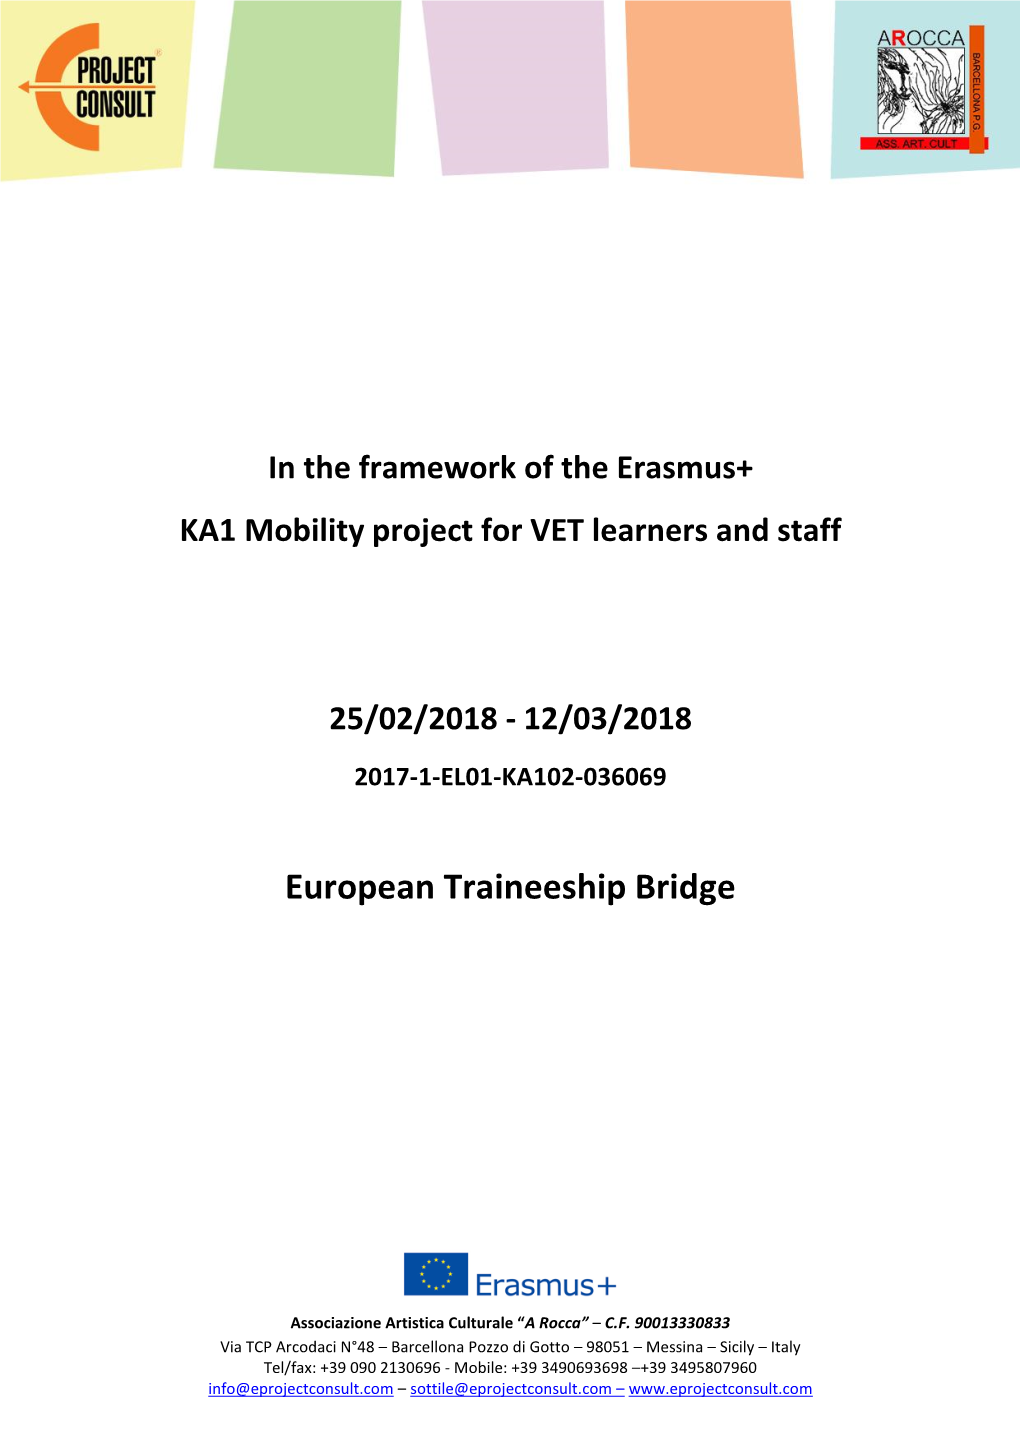 European Traineeship Bridge